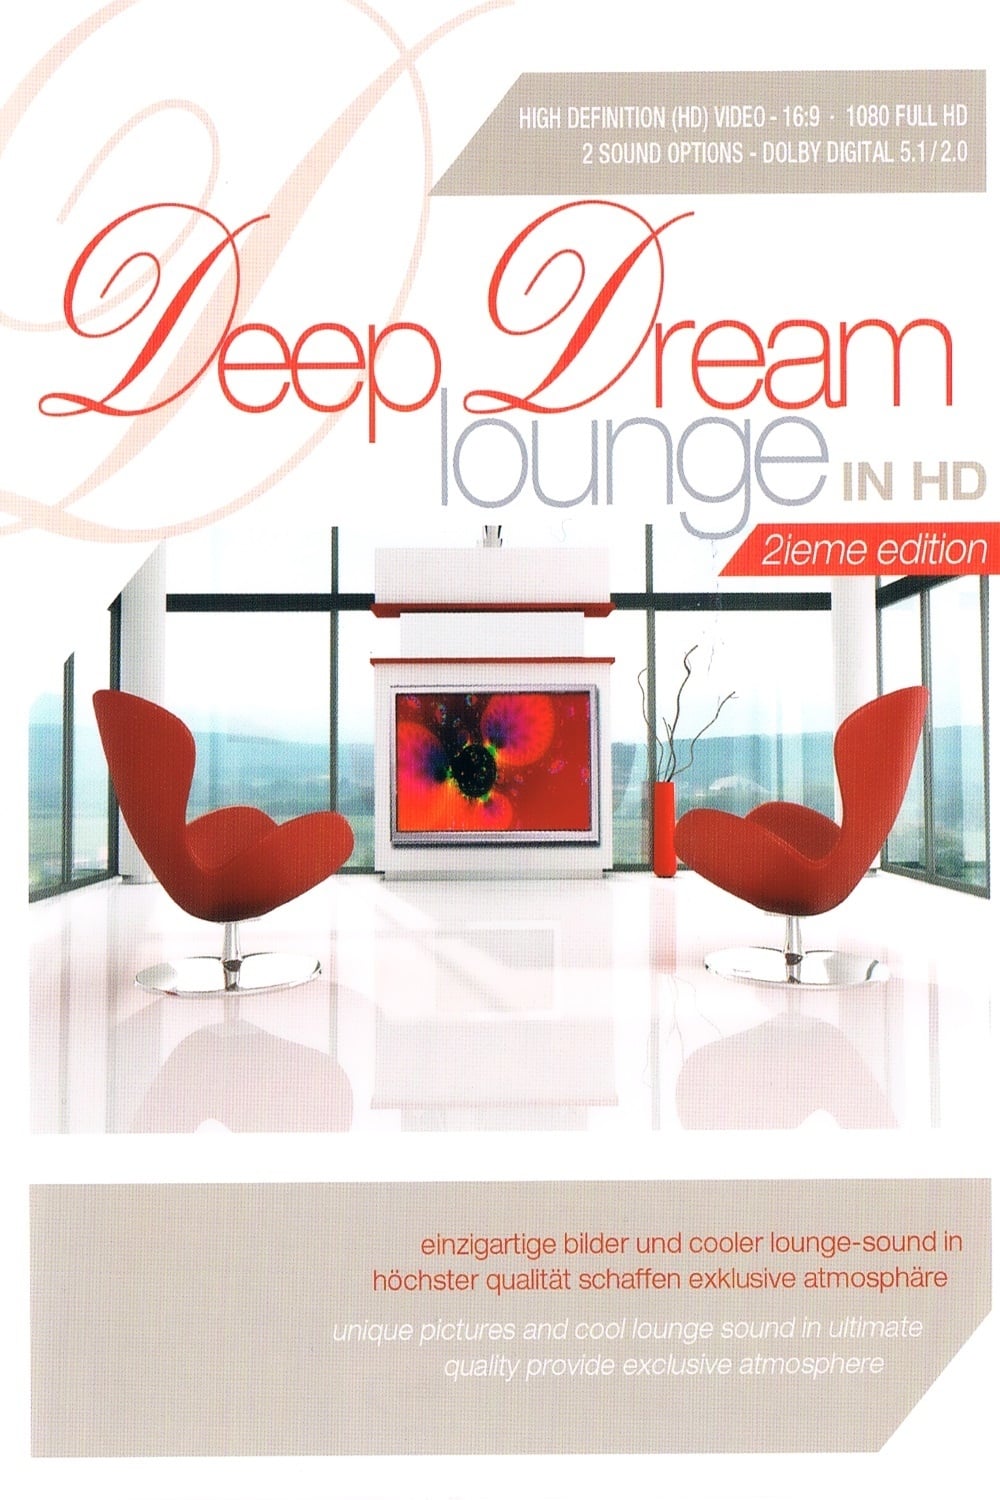 Deep Dream Lounge In HD 2ieme Edition